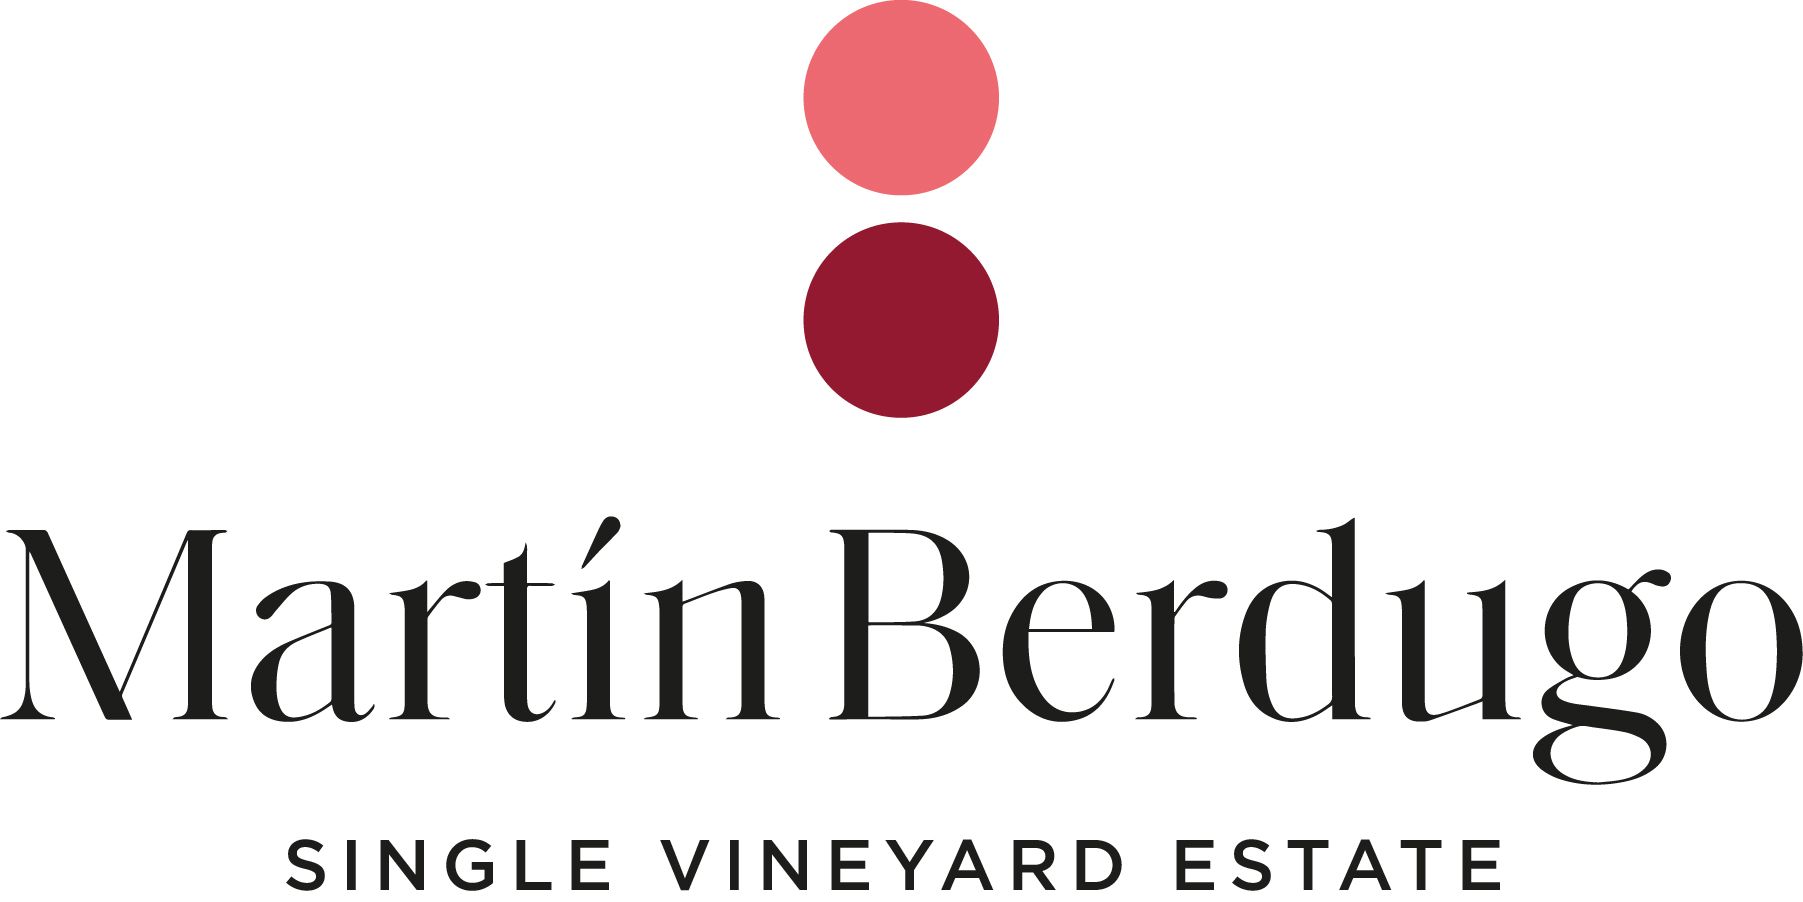 Martín Berdugo - Single Vineyard Estate